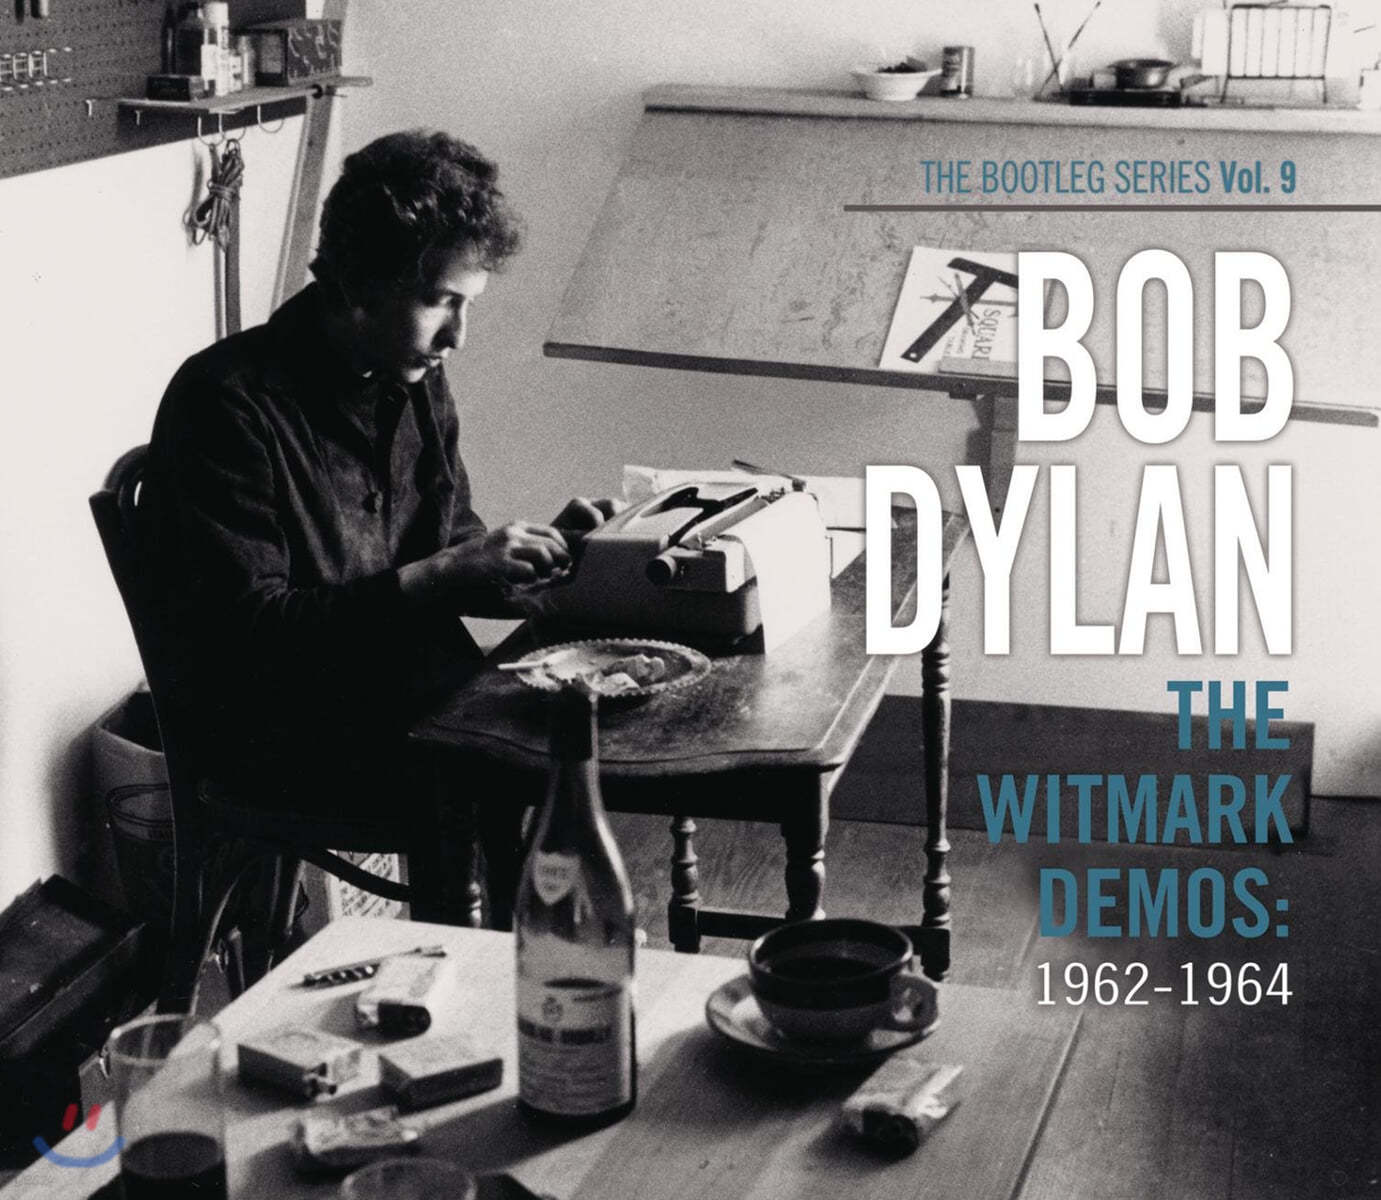 Bob Dylan (밥 딜런) - The Witmark Demos: 1962-1964 The Bootleg Series Vol. 9